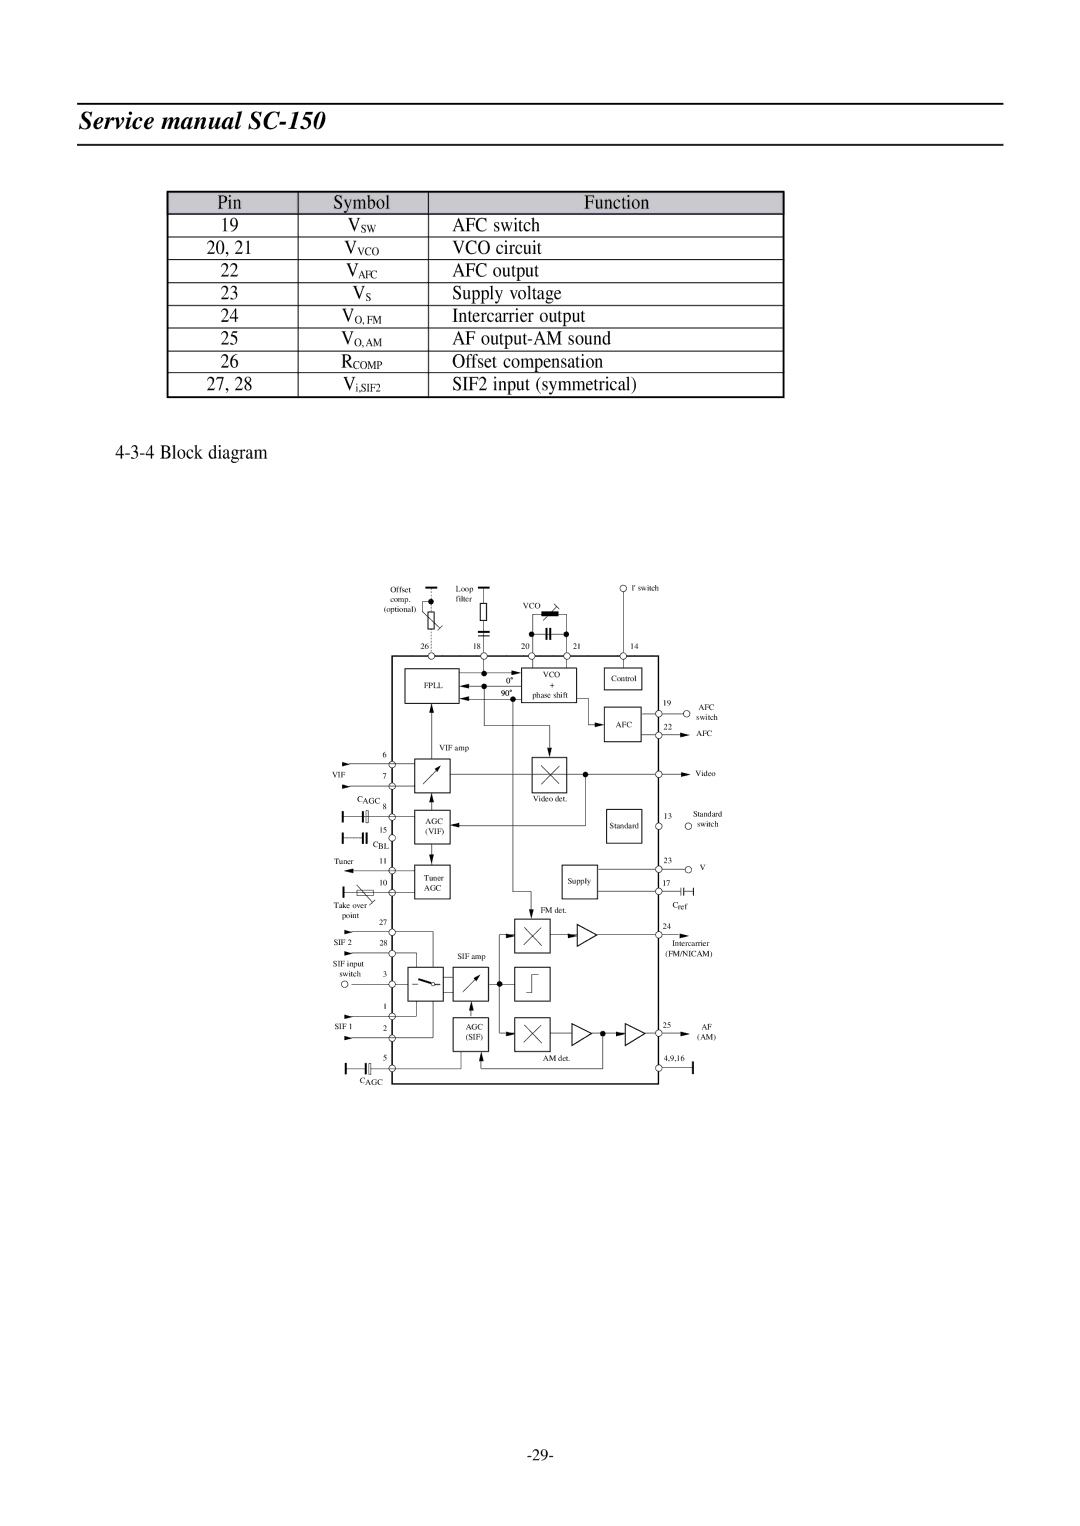 Daewoo DSC-3220E/3220L service manual Pin Symbol Function 